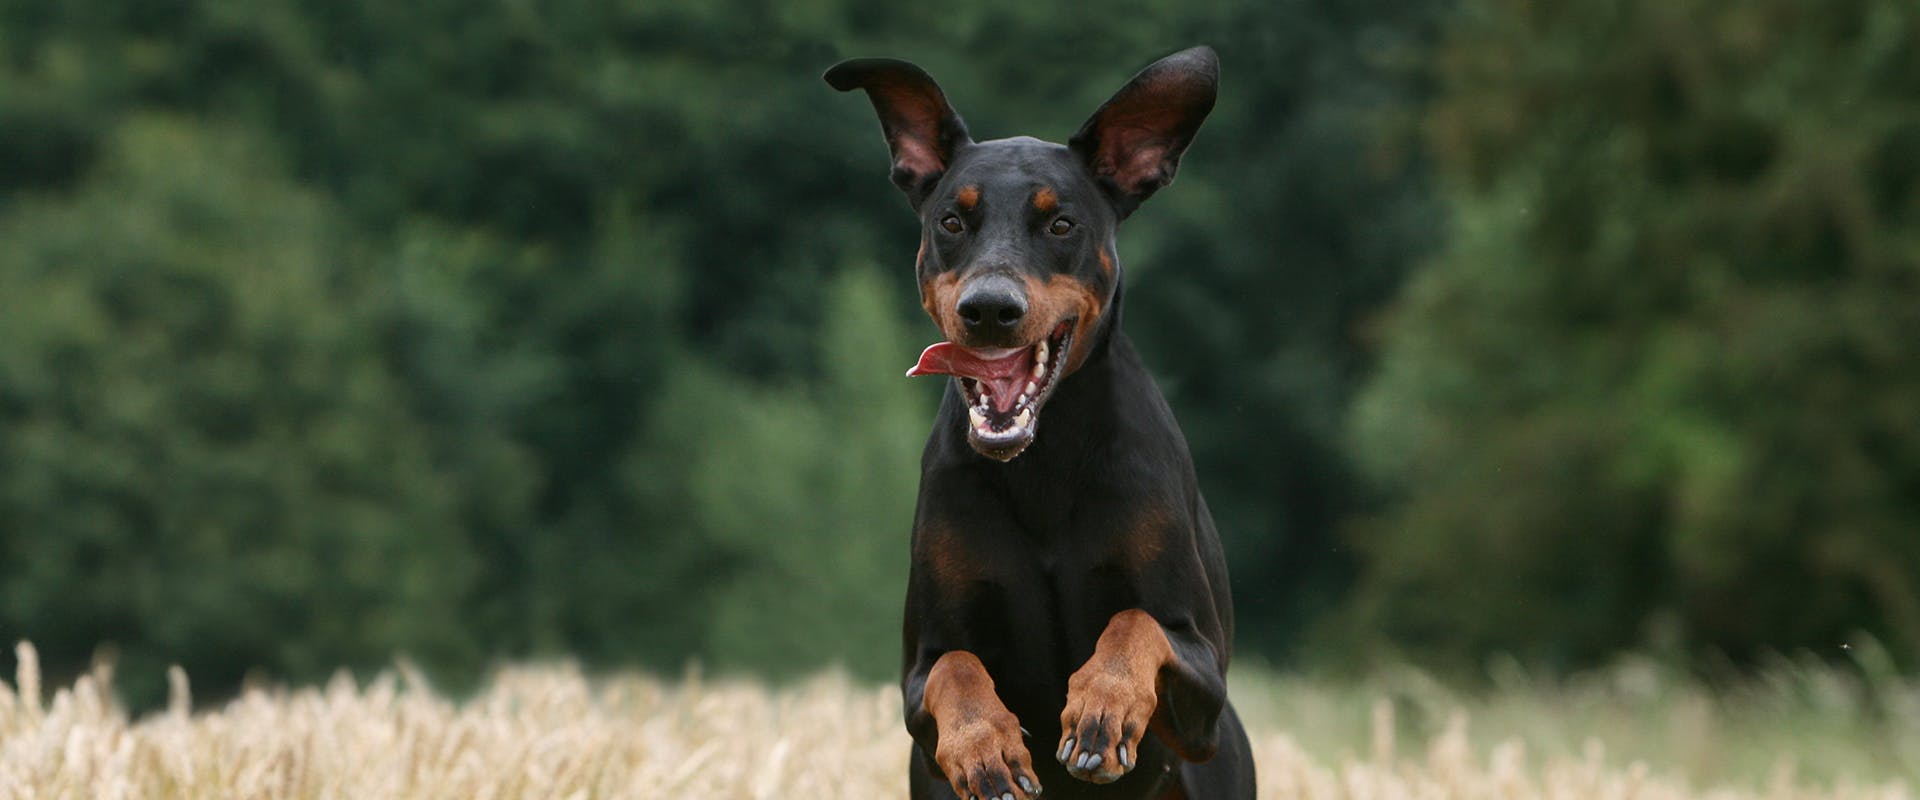 A happy Doberman dog running through fields